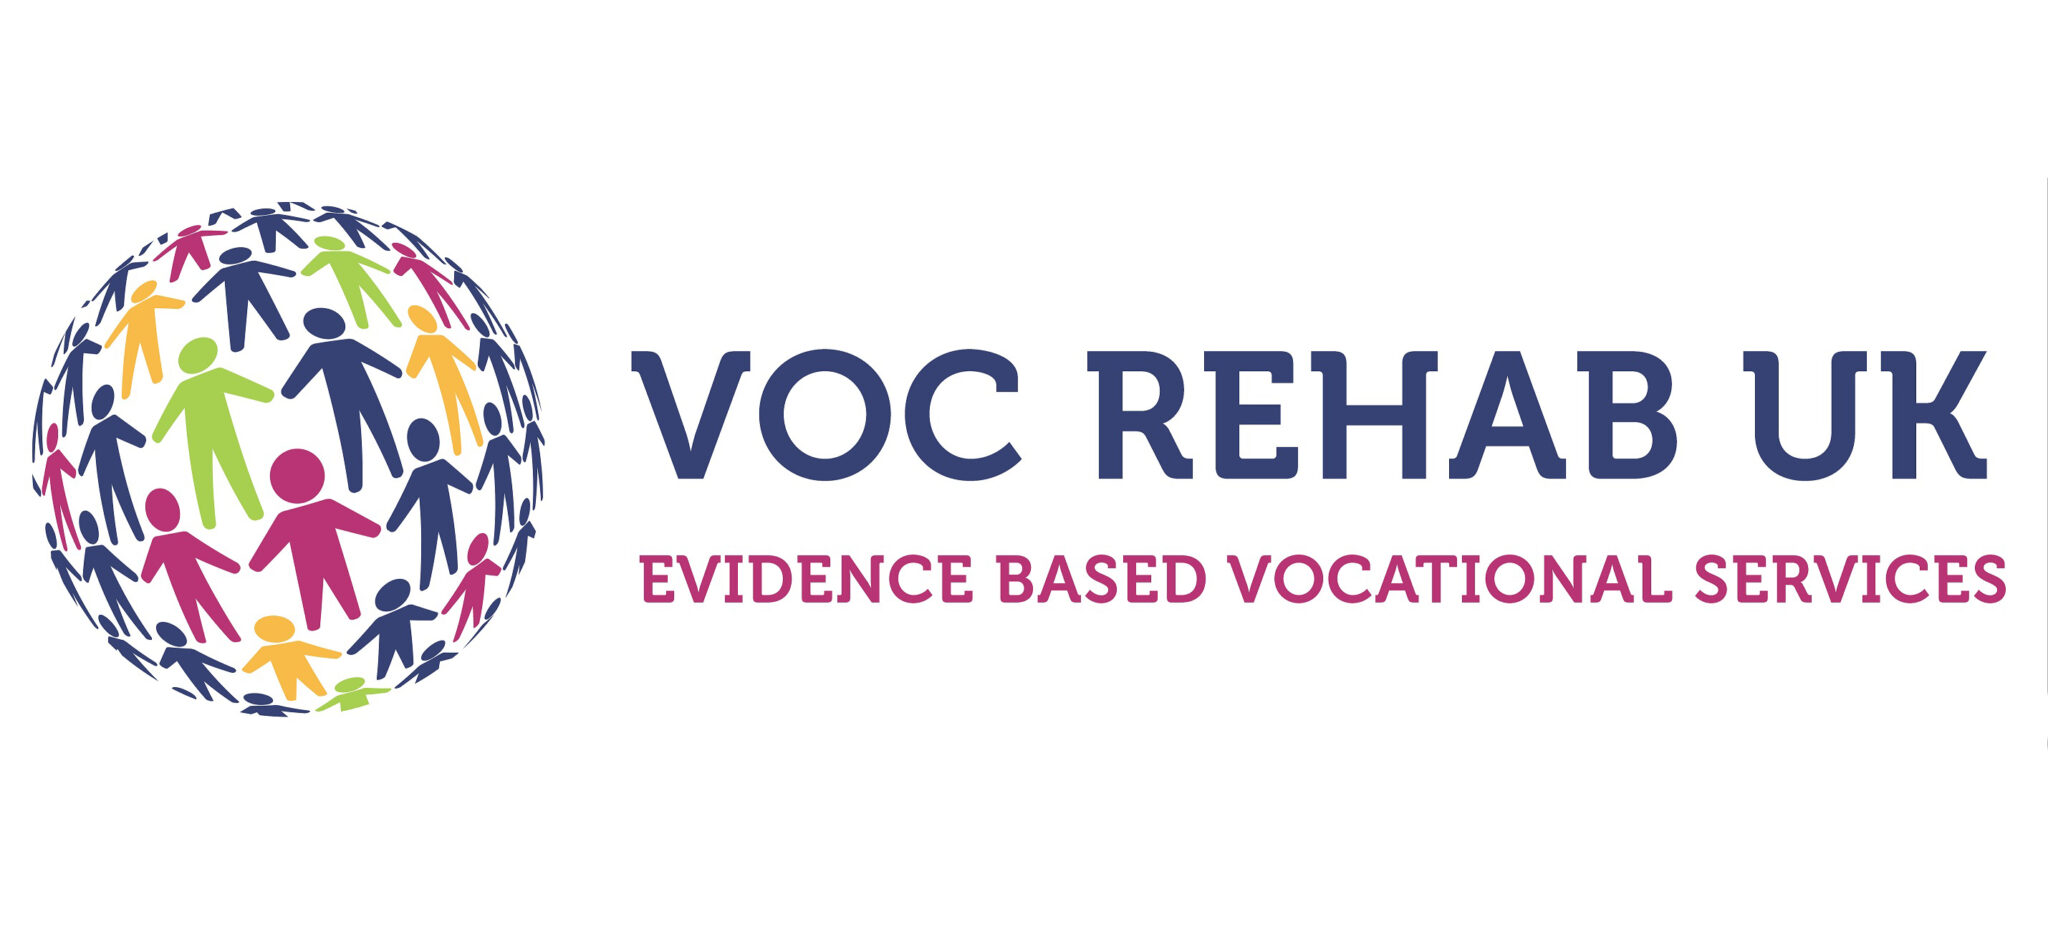 Voc Rehab UK front page only Vocational Rehabilitation Association UK